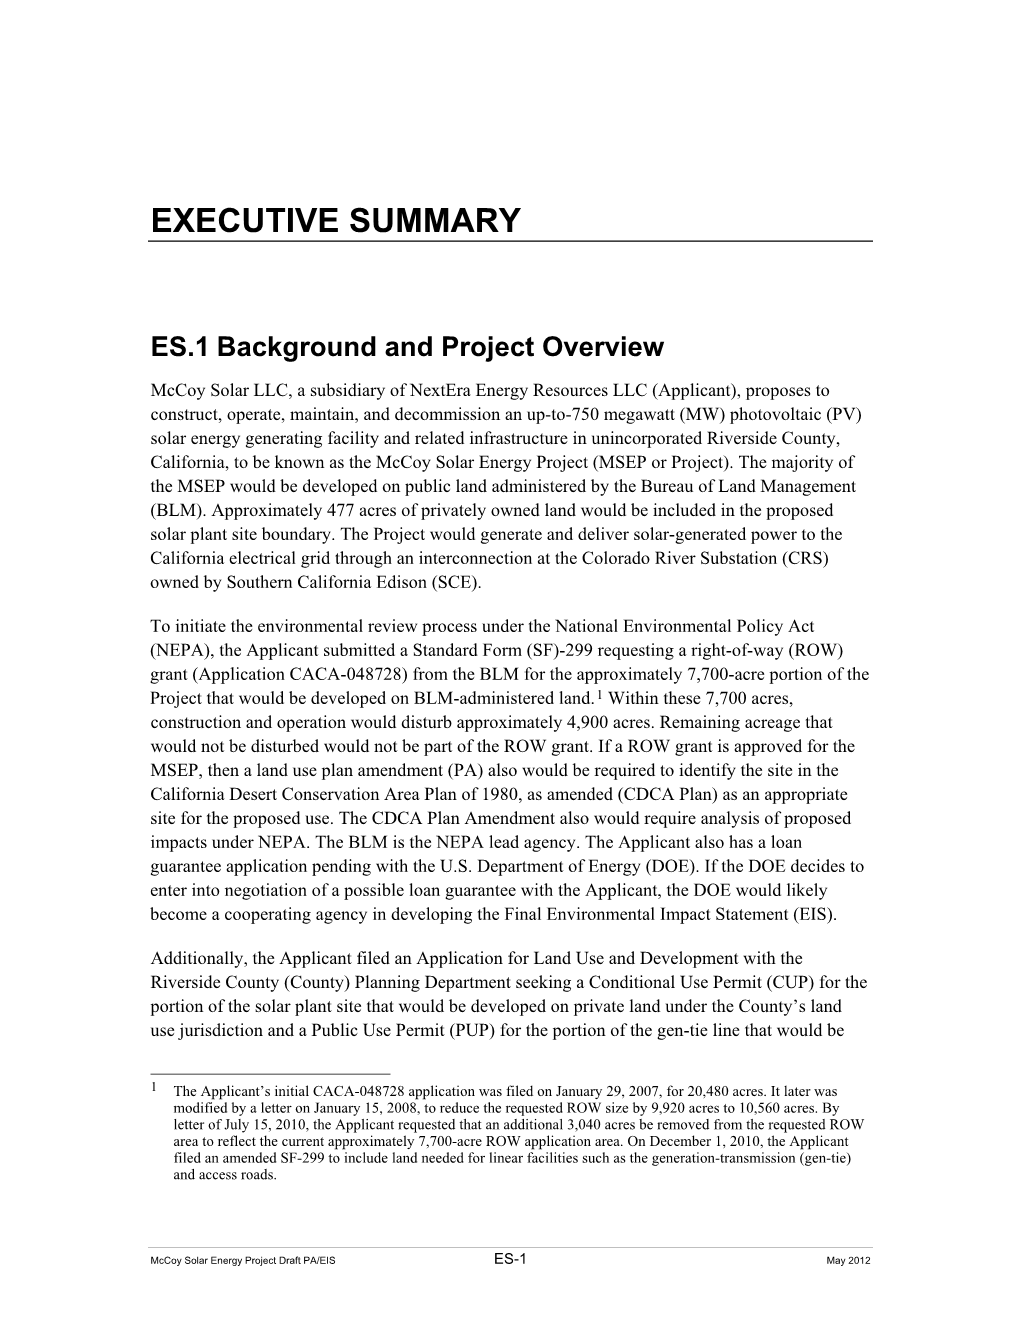 Mccoy Solar Energy Project Draft PA/EIS ES-1 May 2012 Executive Summary